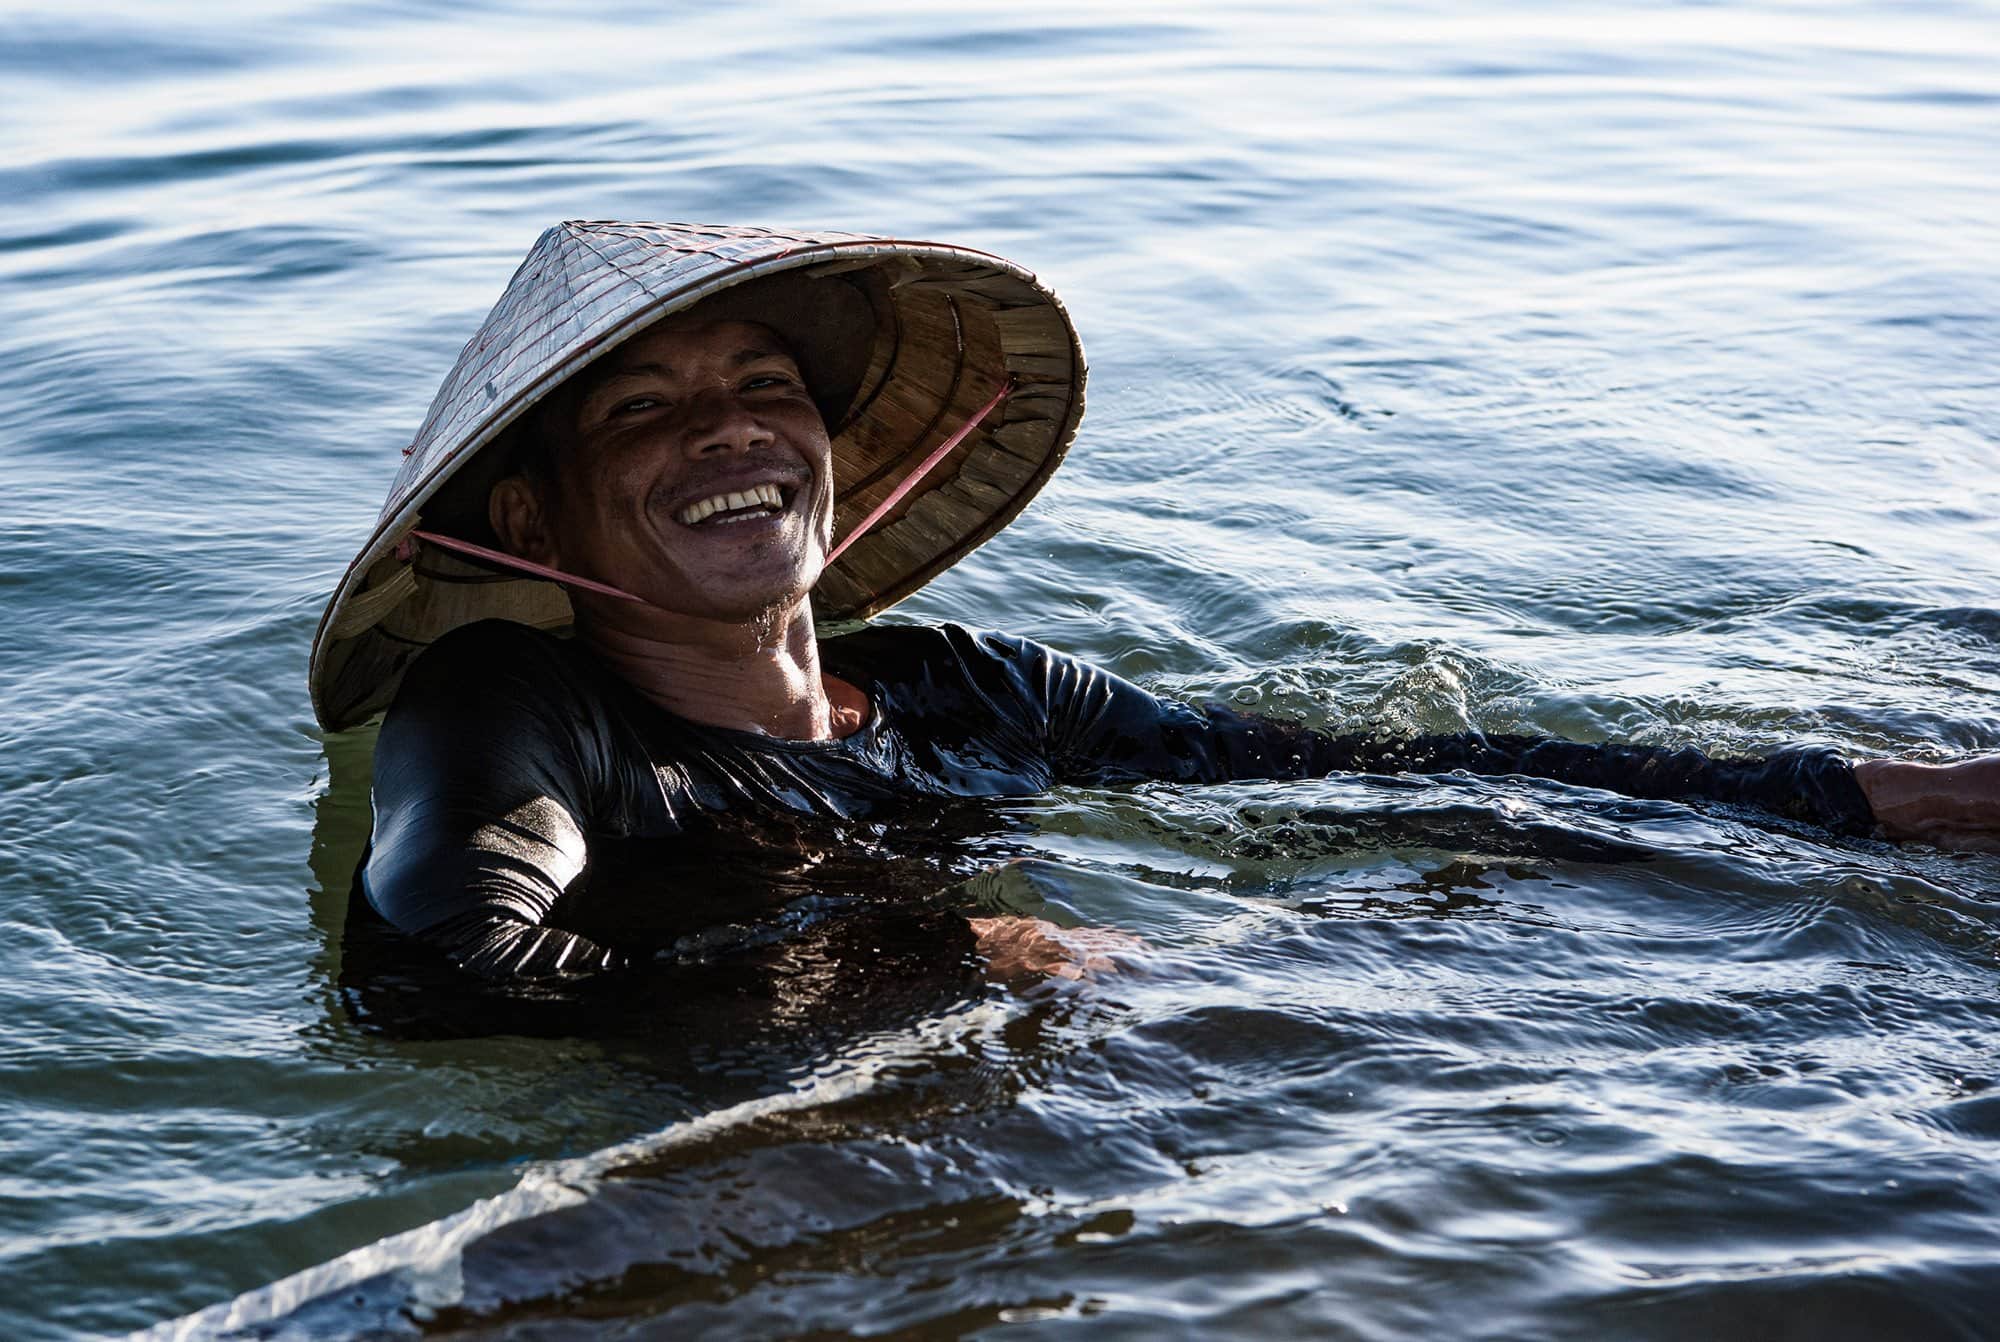 Portrait photography in Laos